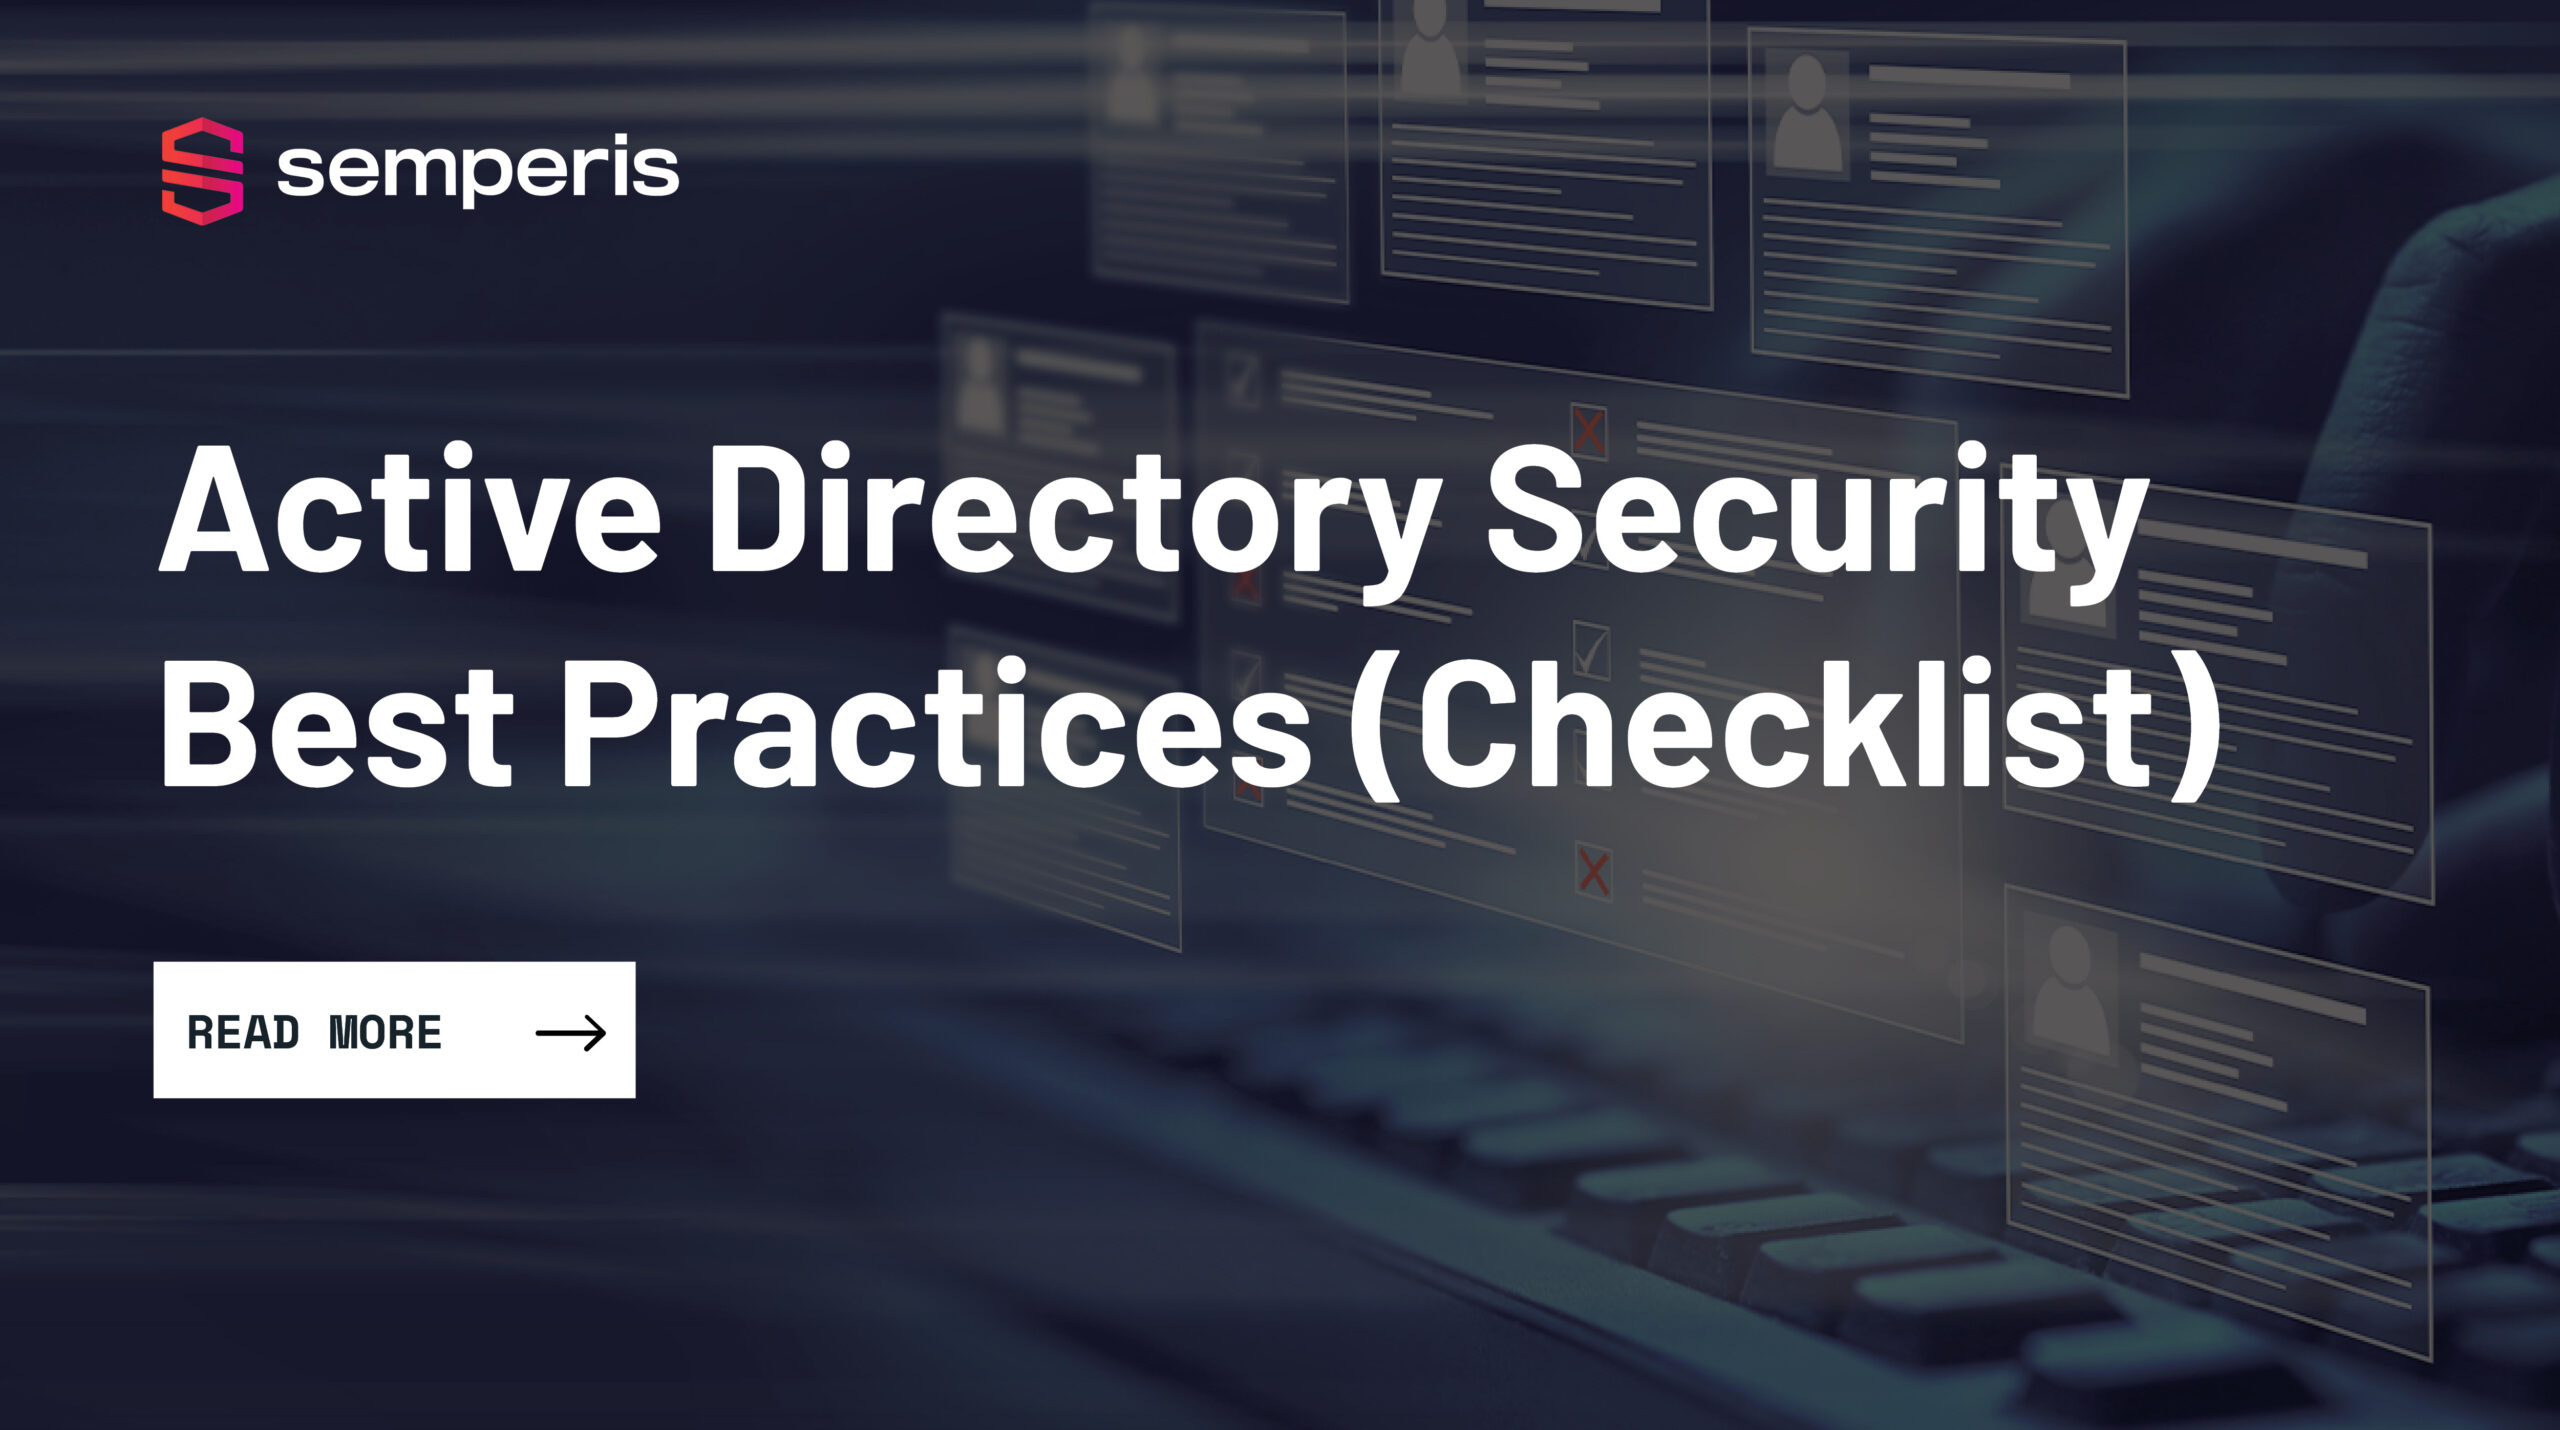 Active Directory Security Best Practices